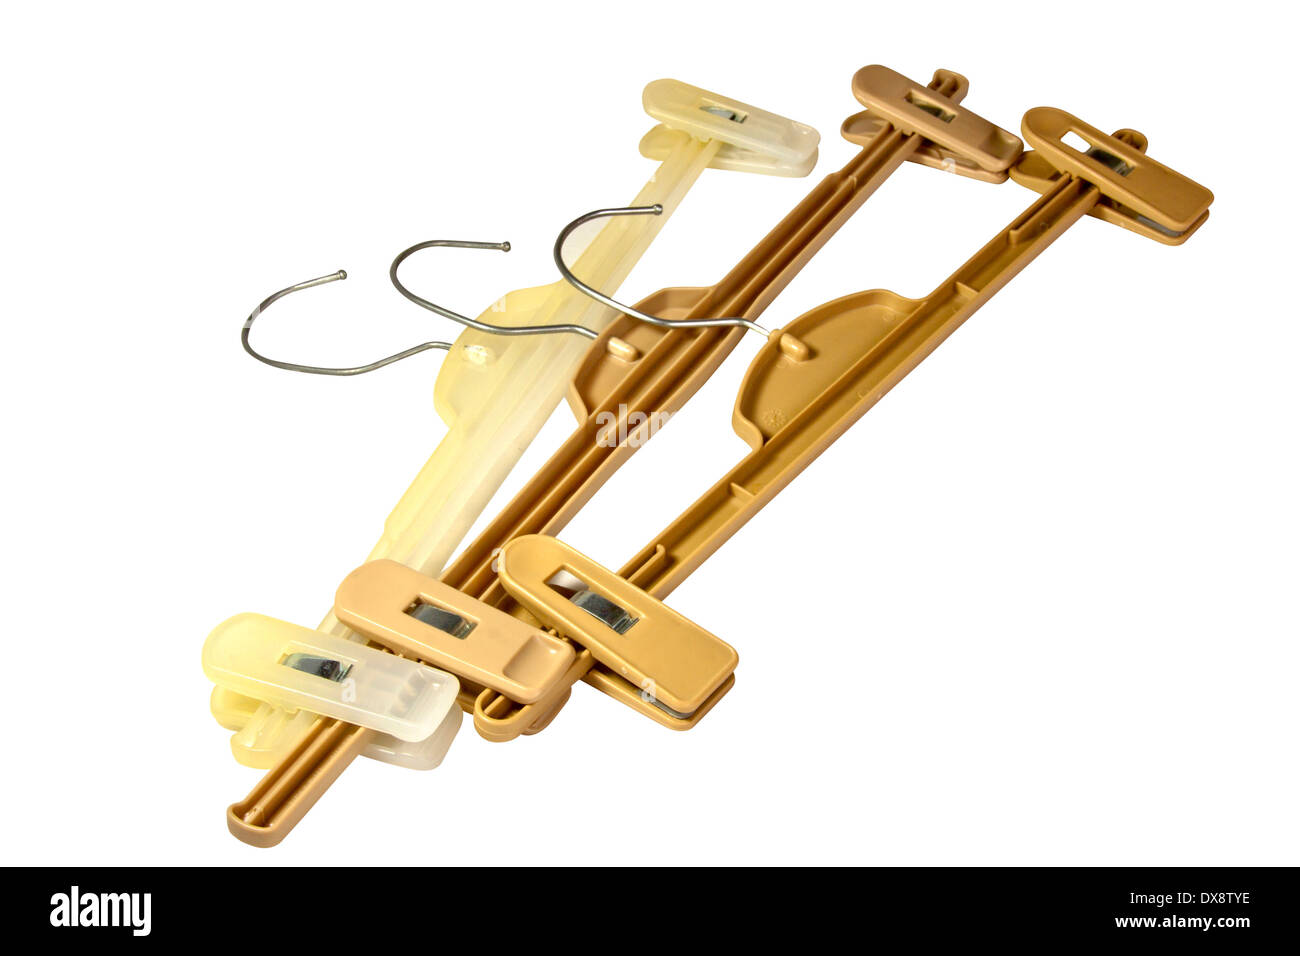 https://c8.alamy.com/comp/DX8TYE/three-brown-plastic-coat-hangers-with-metal-hooks-DX8TYE.jpg